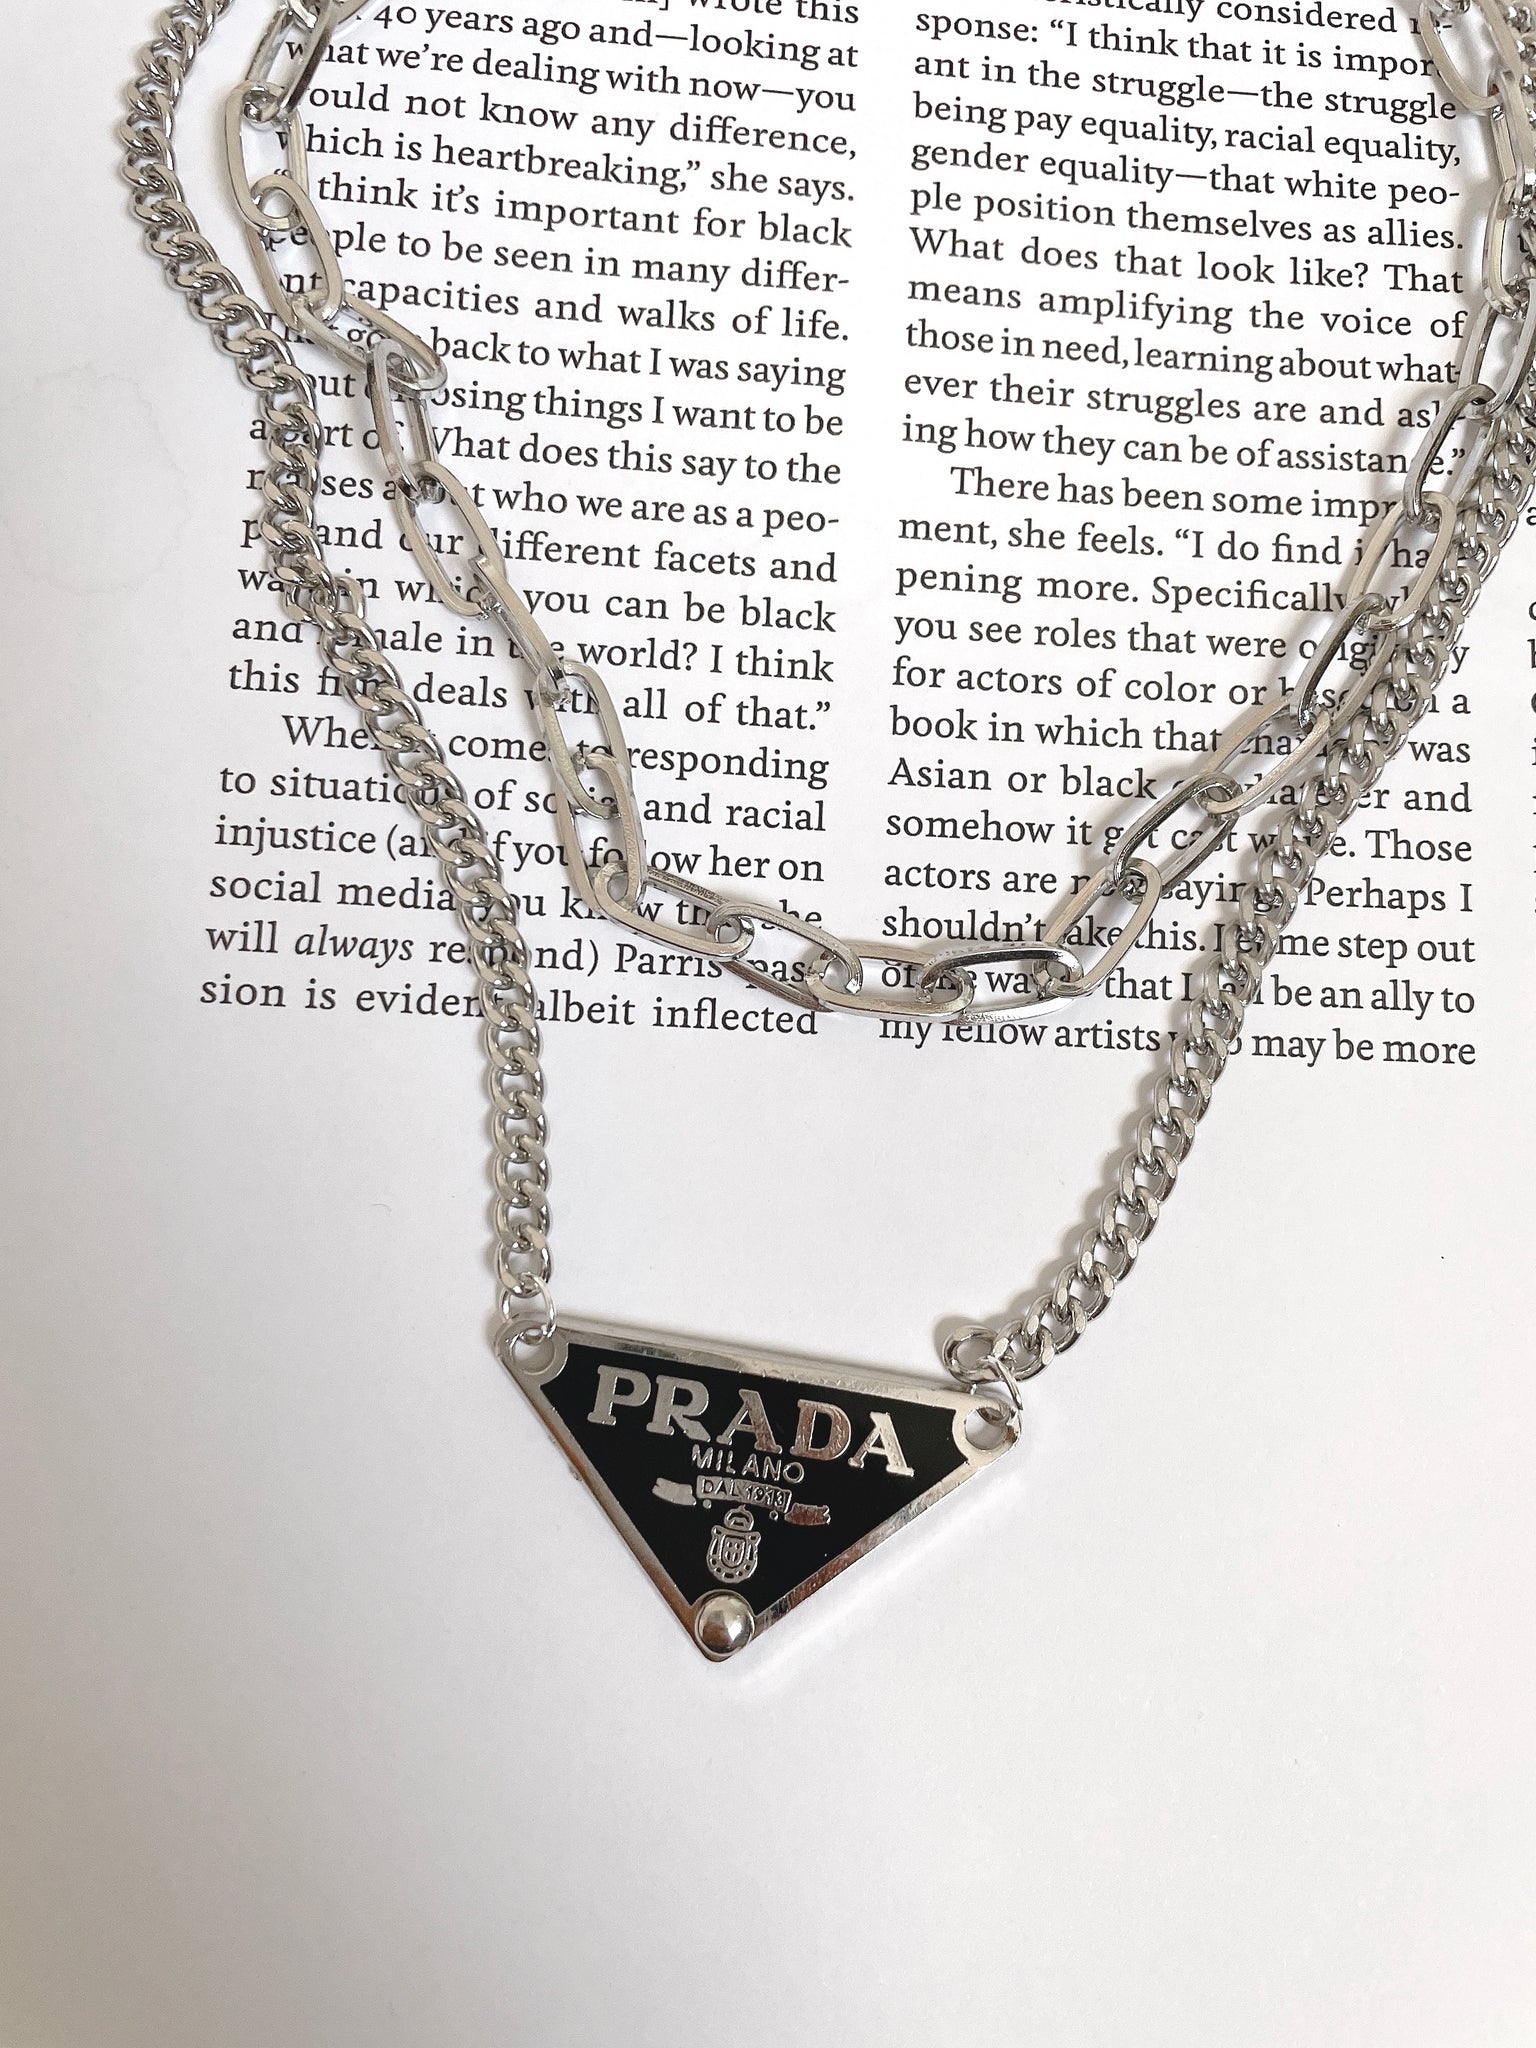 Prada Necklace - Shop on Pinterest